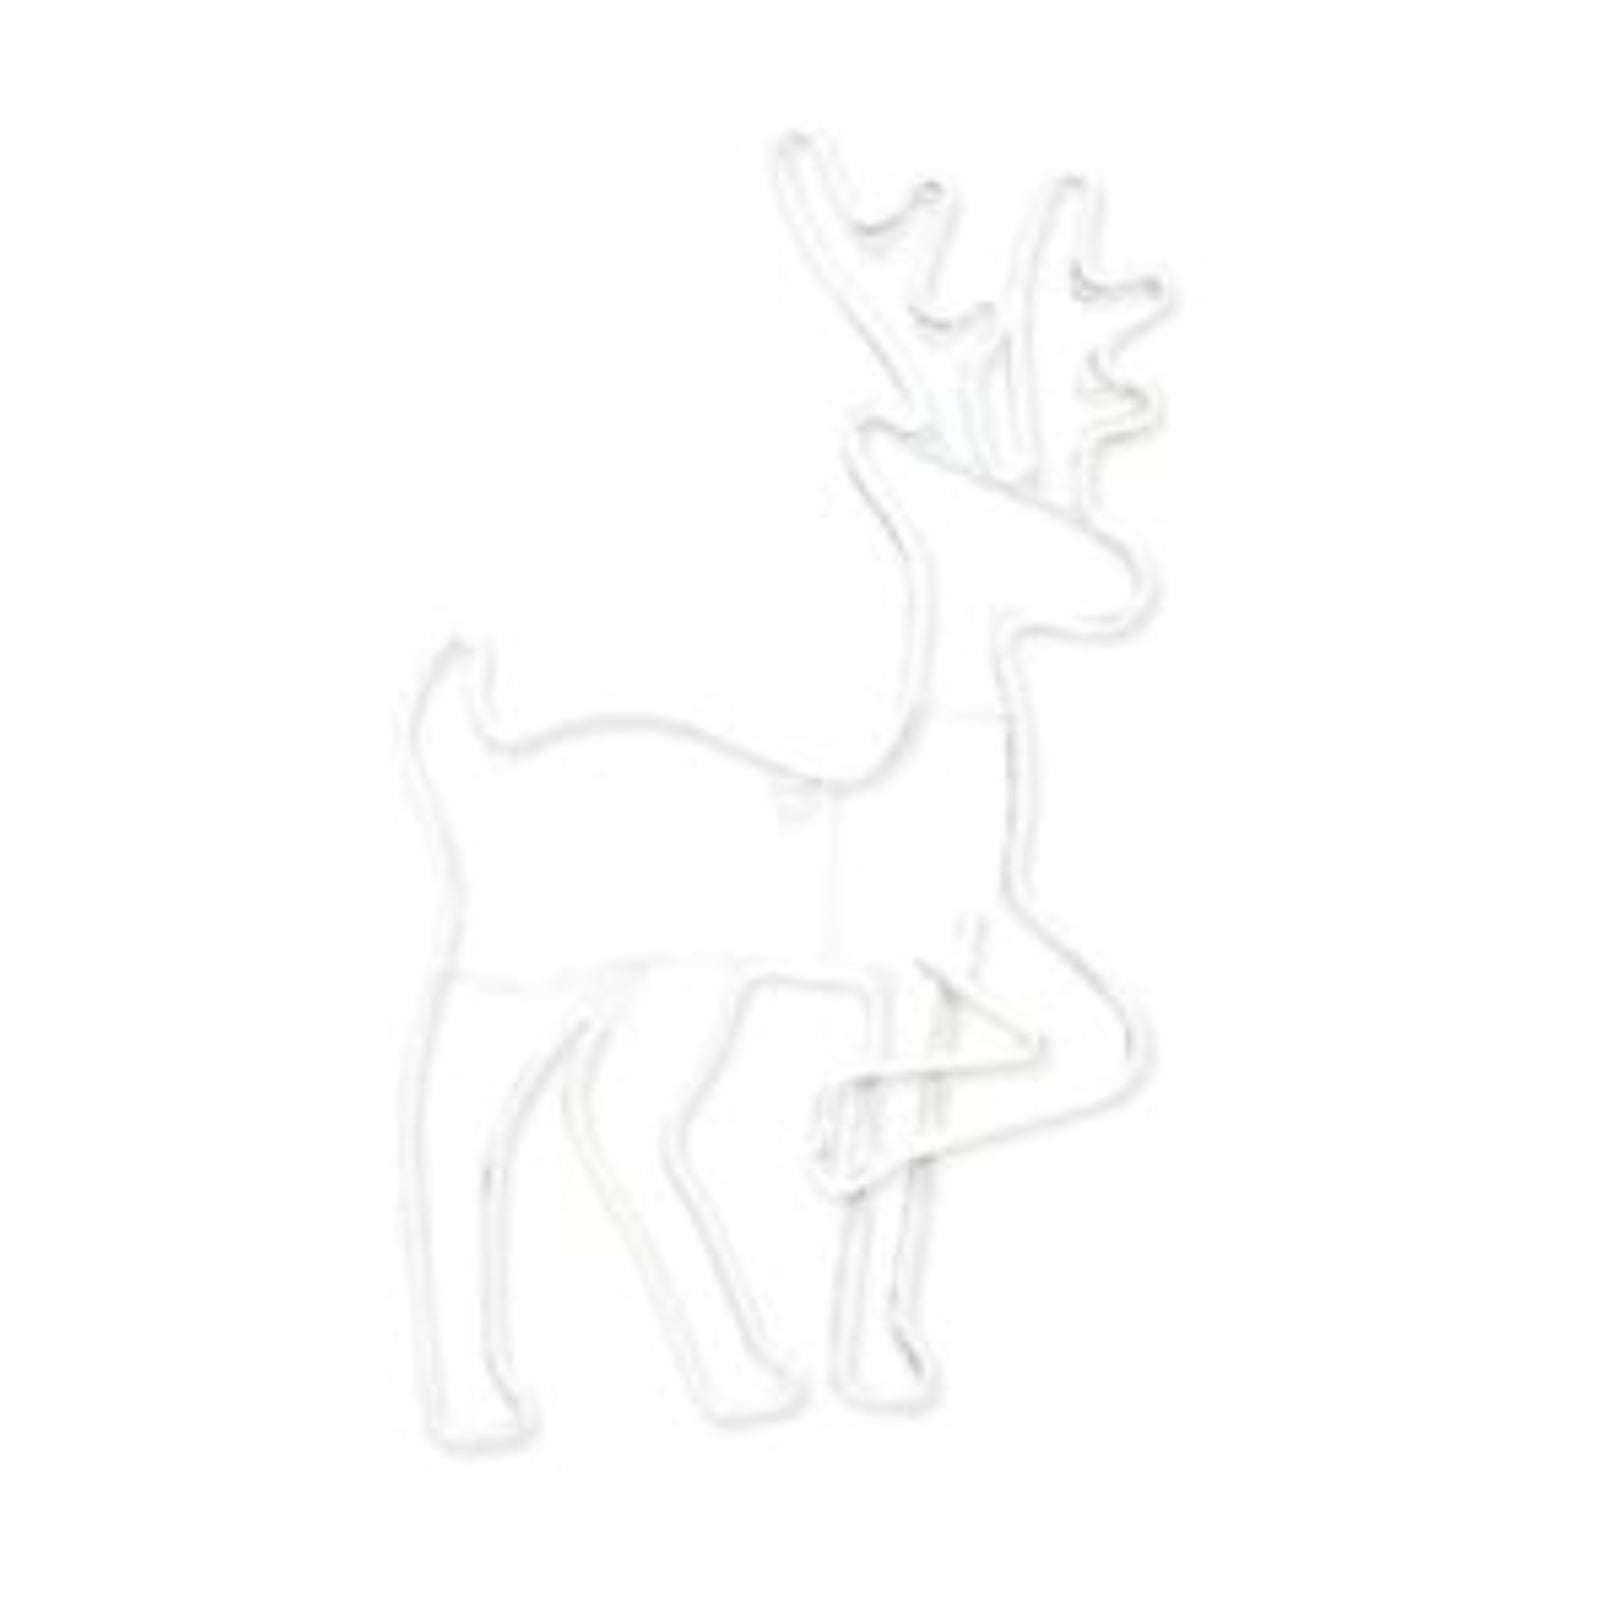 82CM Christmas Ultra Bright LED Deer Light Large reindeer Decoration Santa - Homeware Discounts